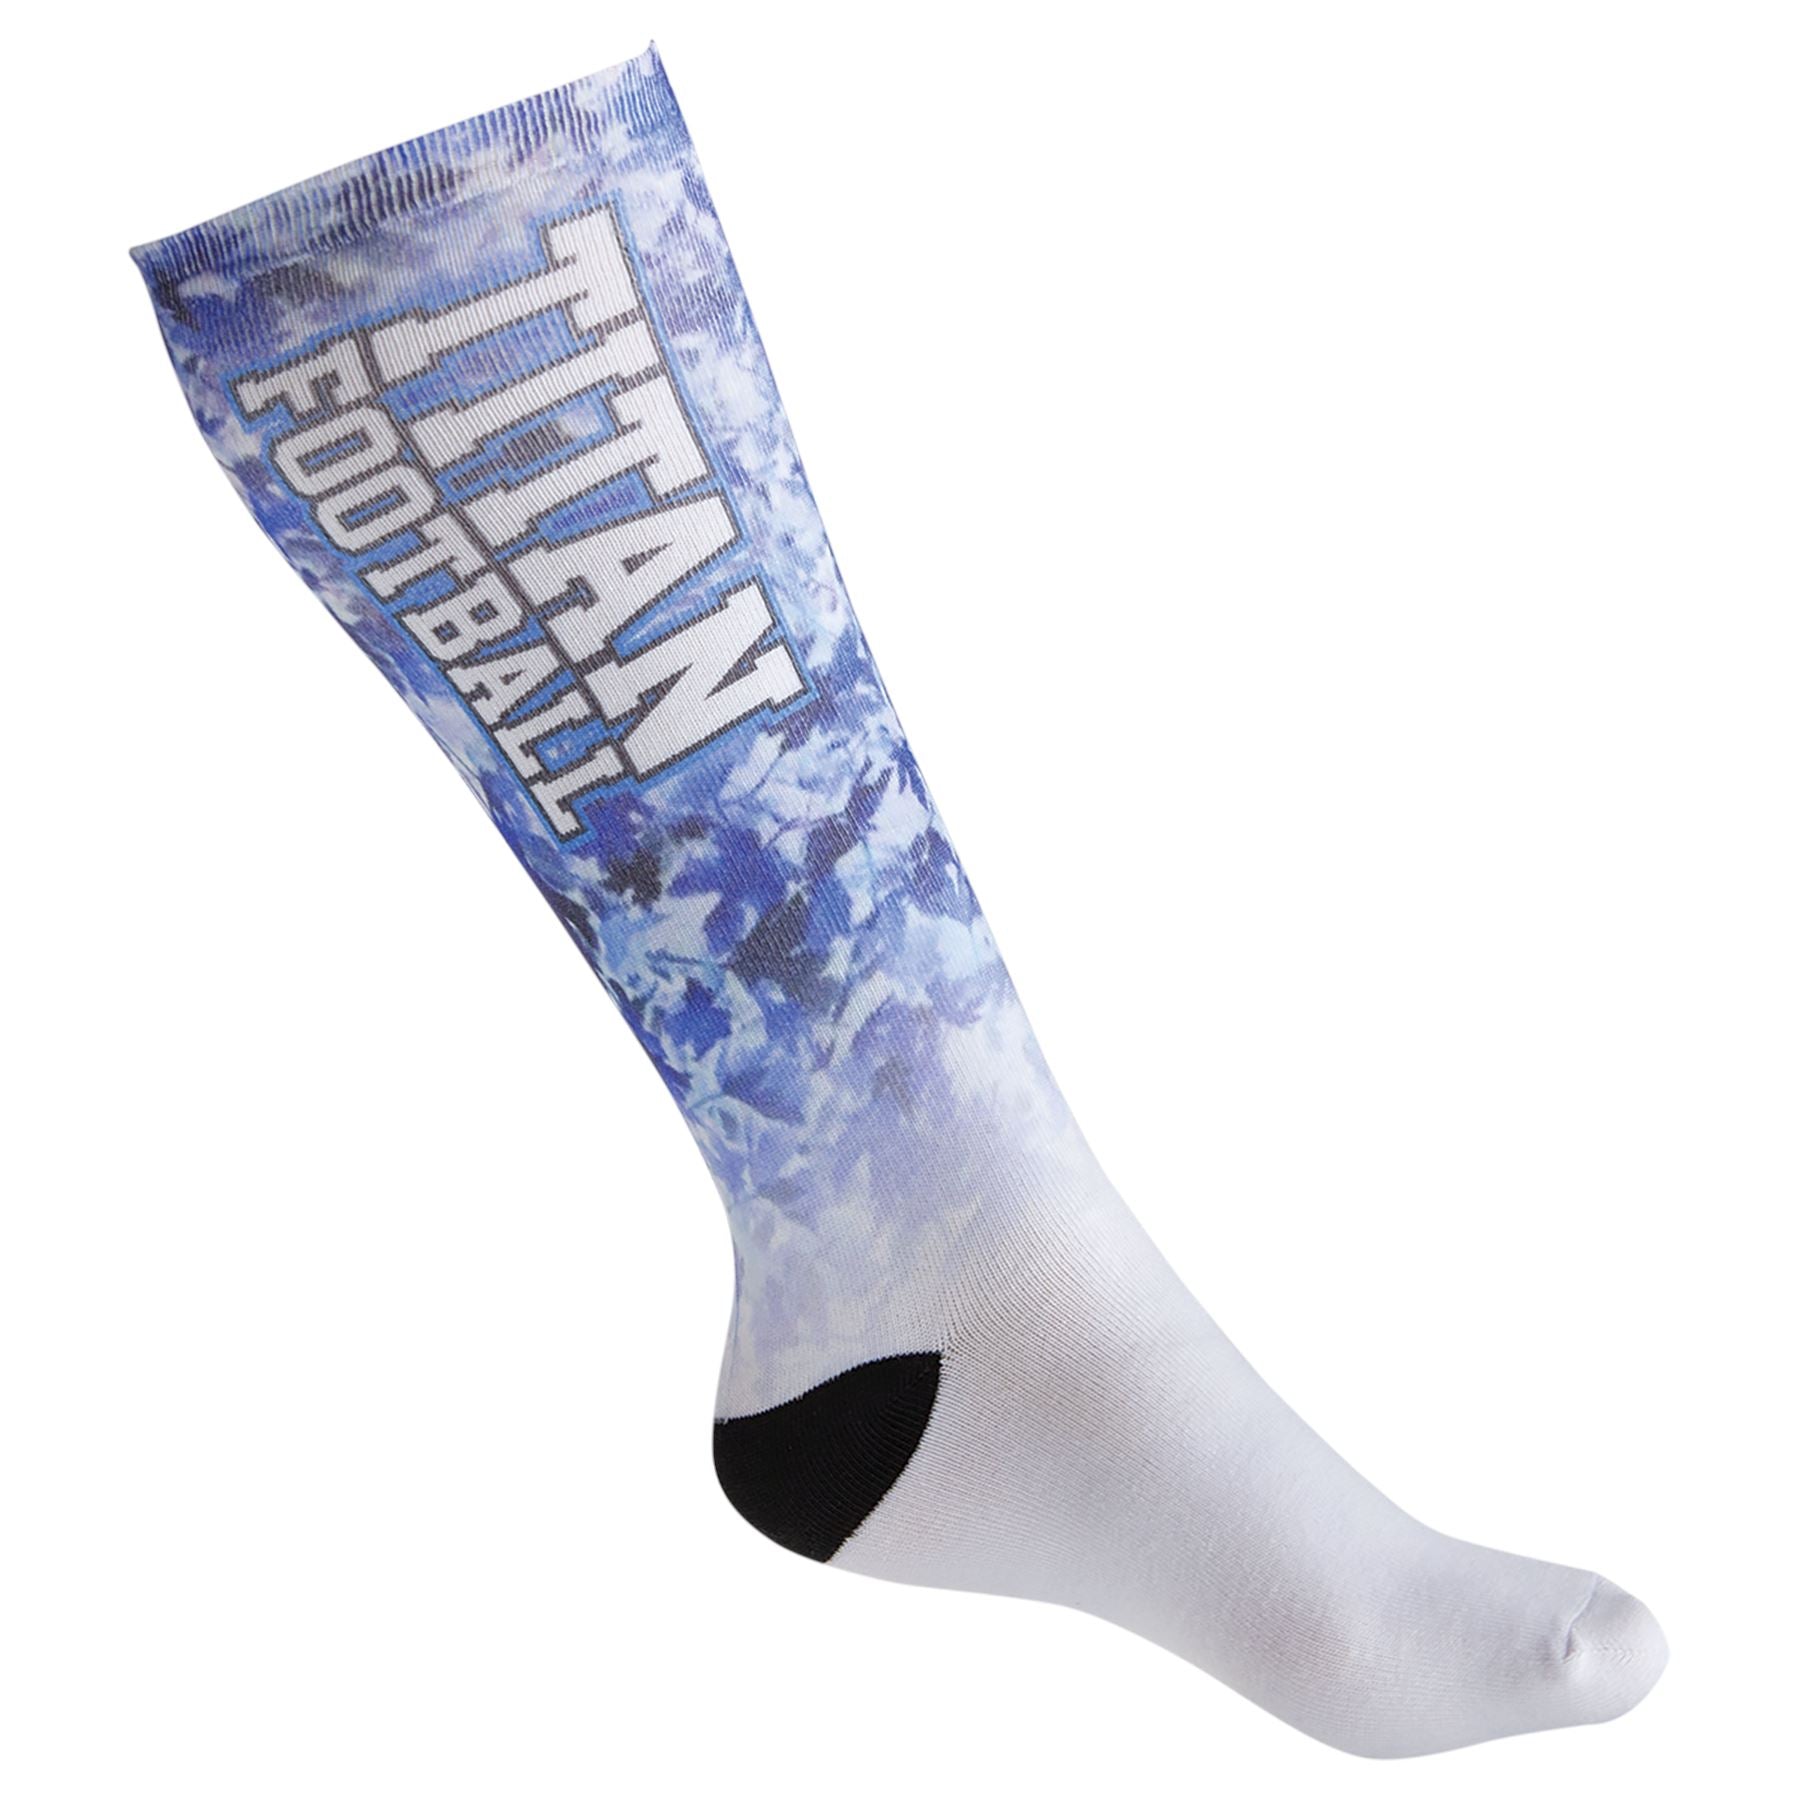 Unisex Adult Knee High Socks (1 Pair), Full Color Dye Sub Socks Craftworks NW 